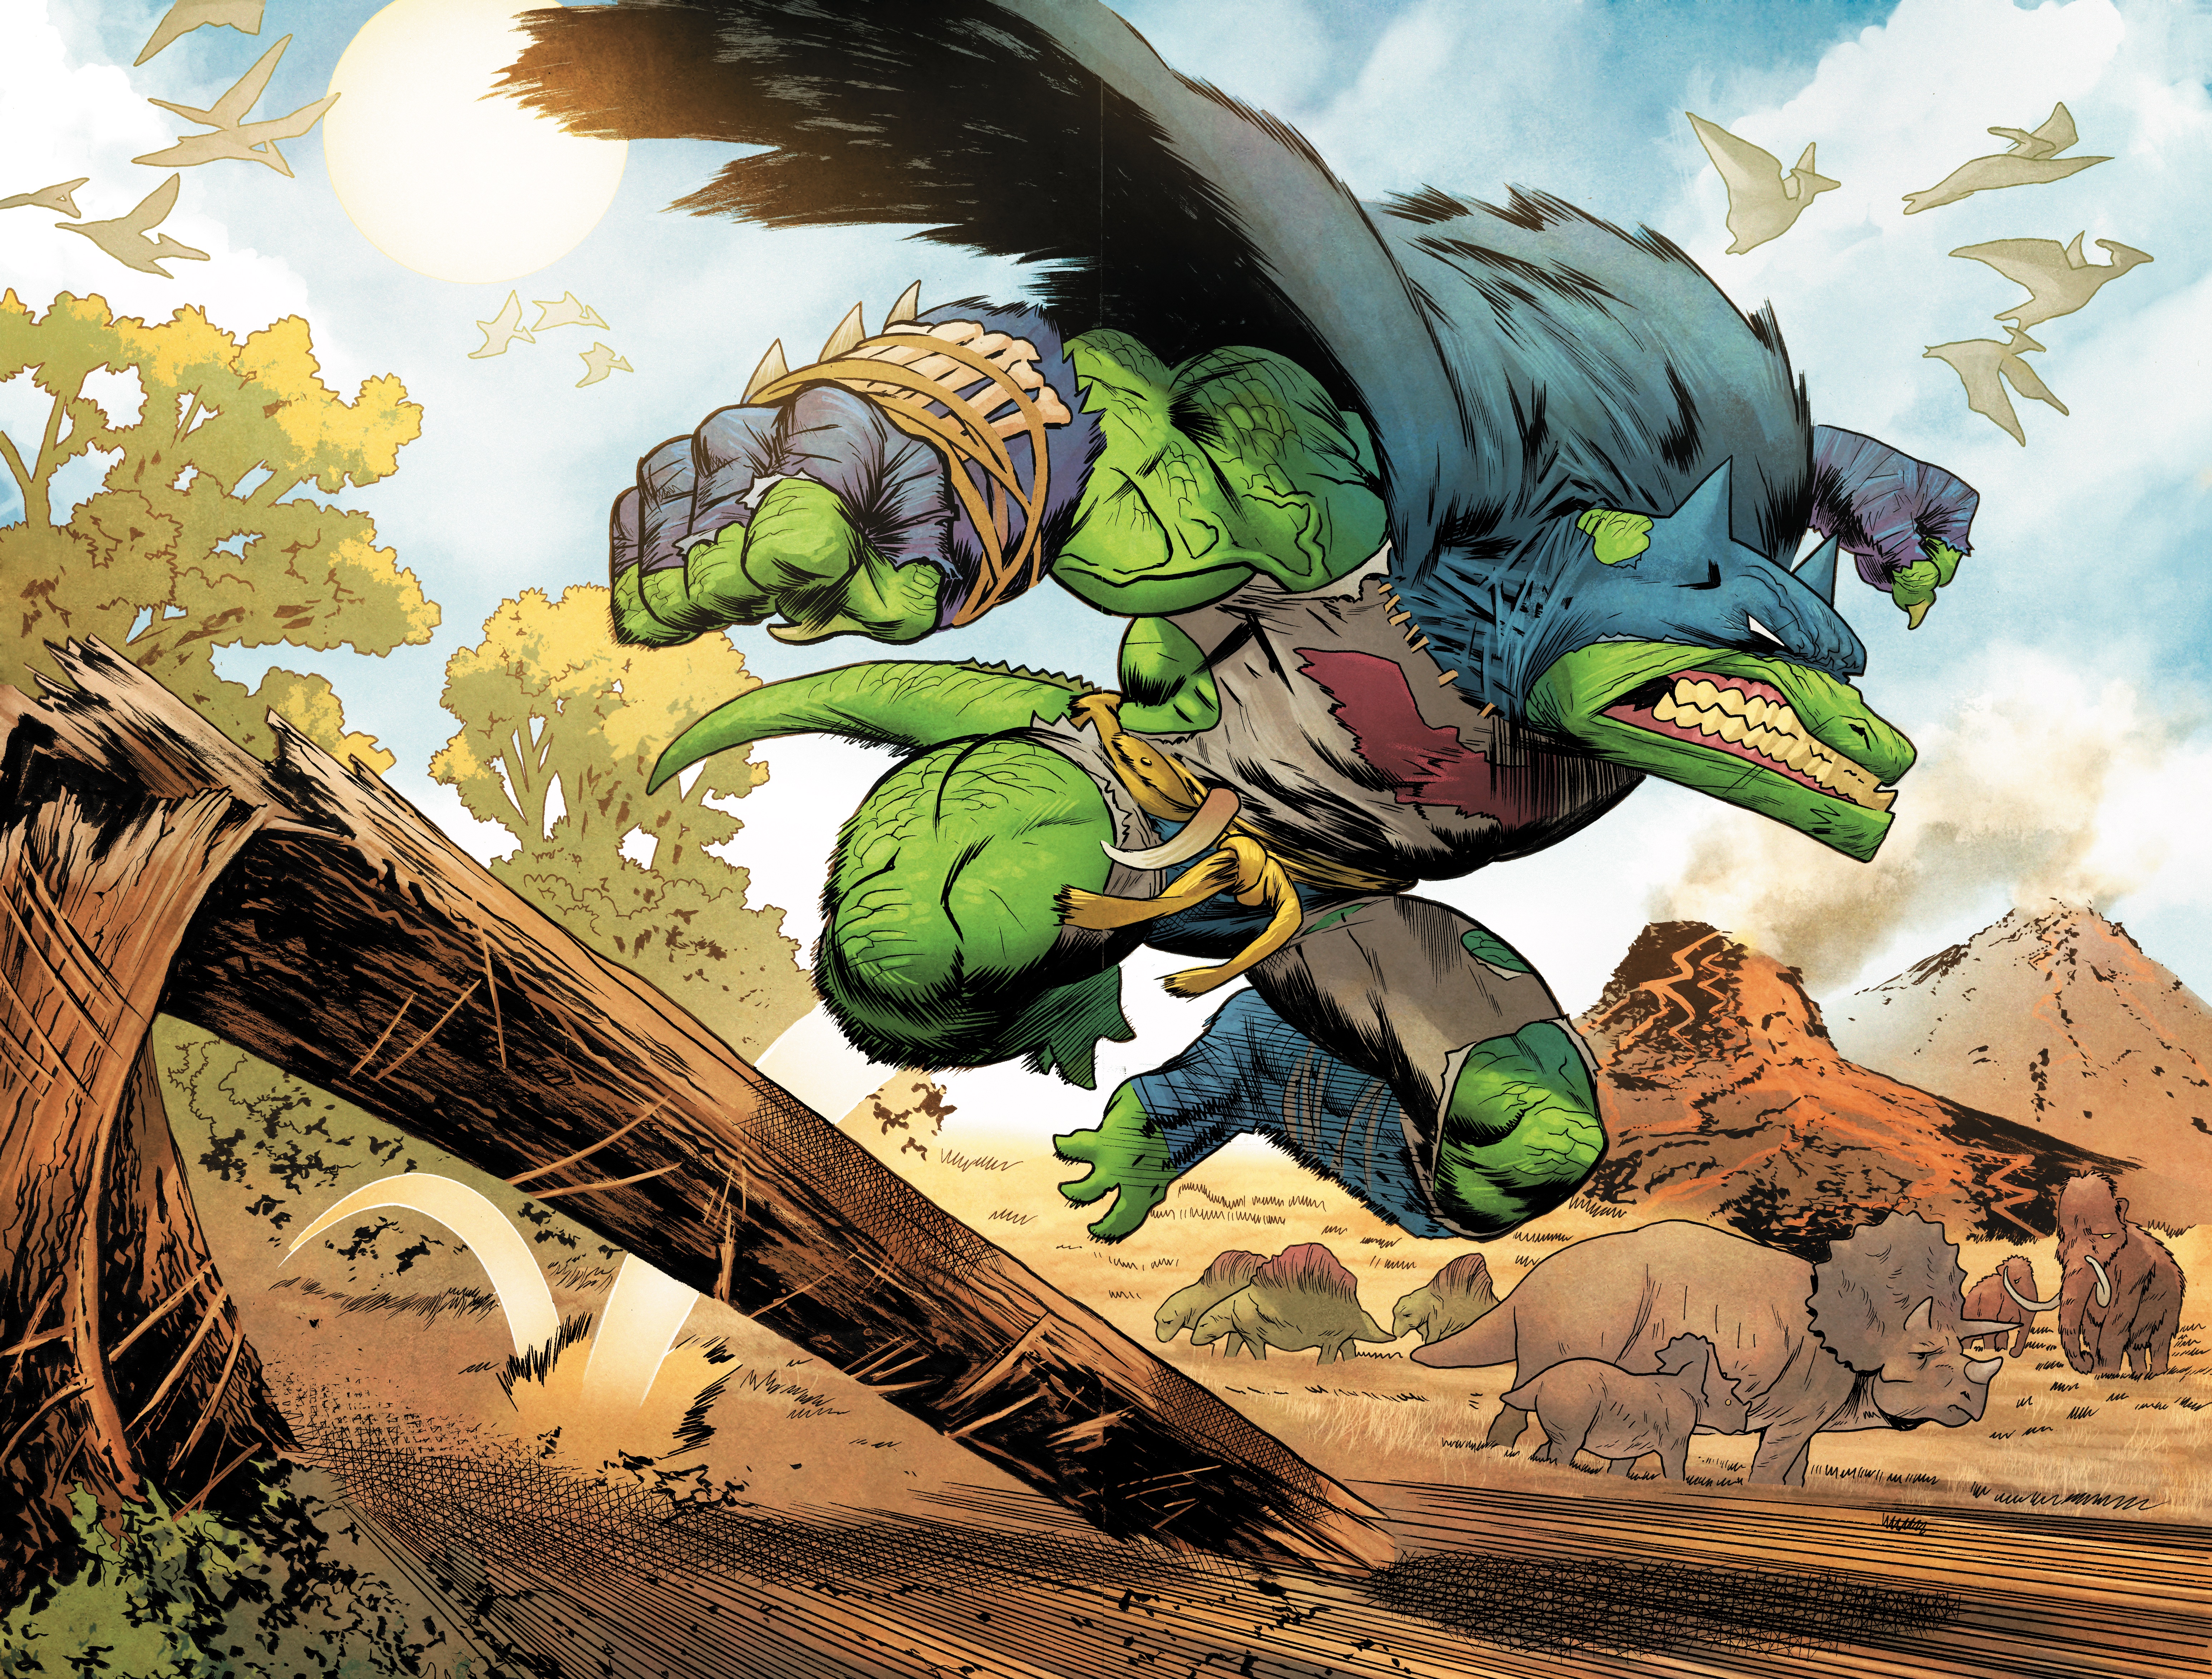 Batman, a green anthropomorphic allosaurus in a Batman costume, leaps across the prehistoric plains in Jurassic League.